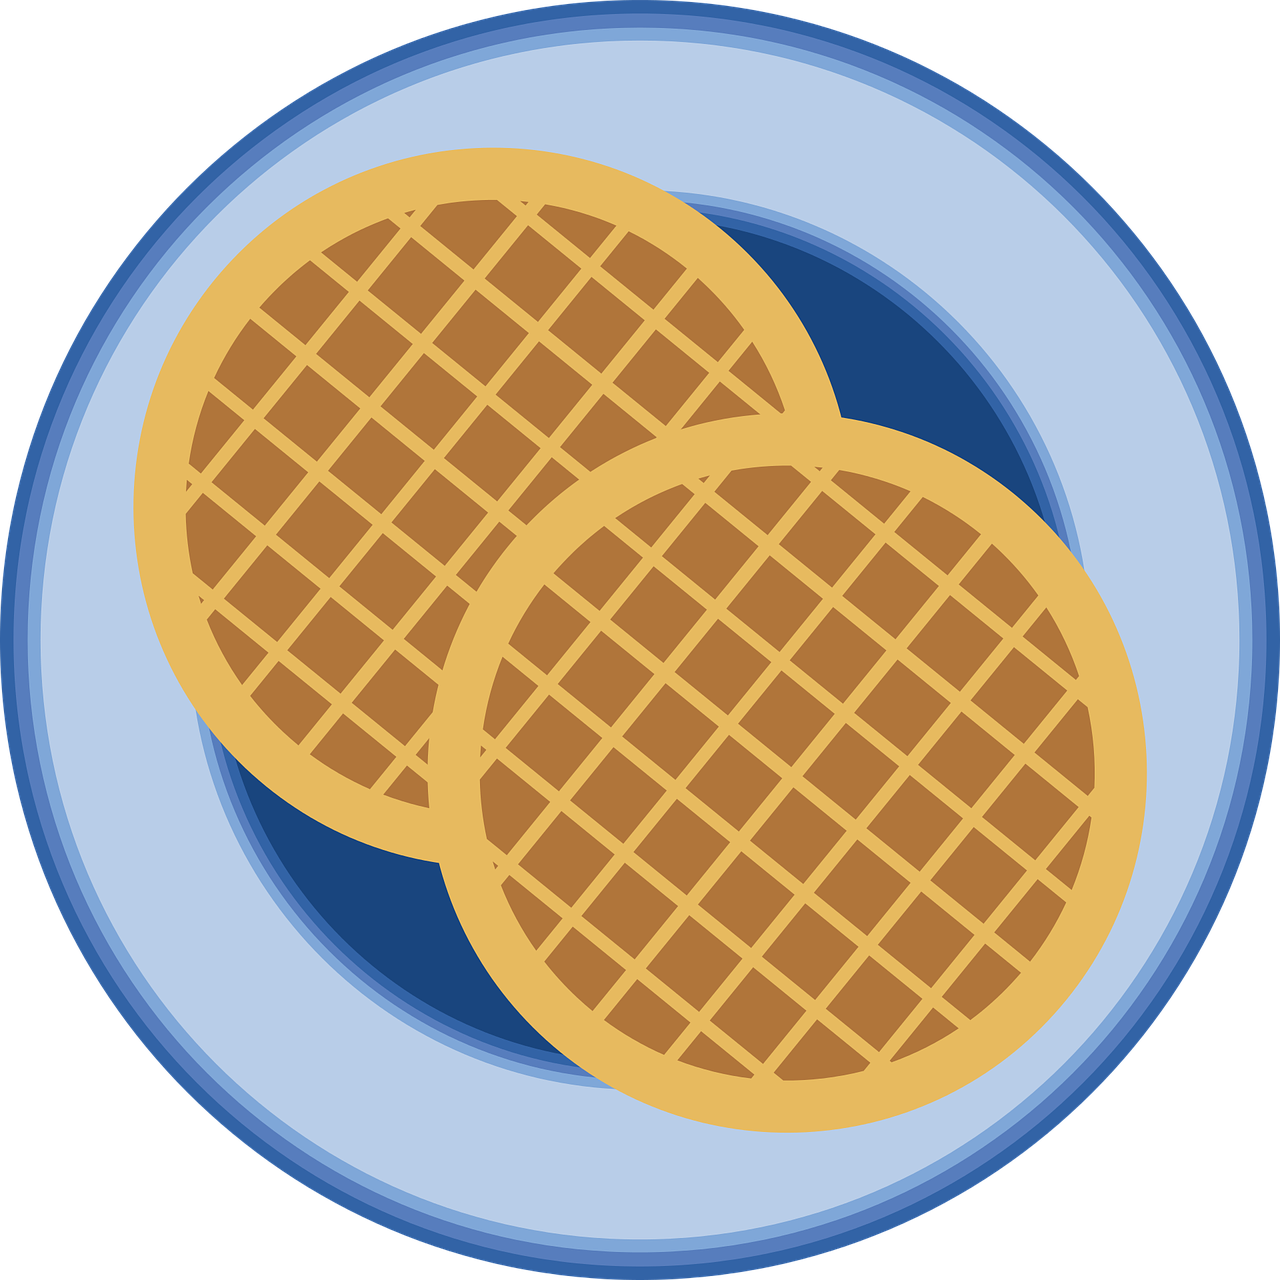 Graphic Waffle Breakfast Food  - BilliTheCat / Pixabay